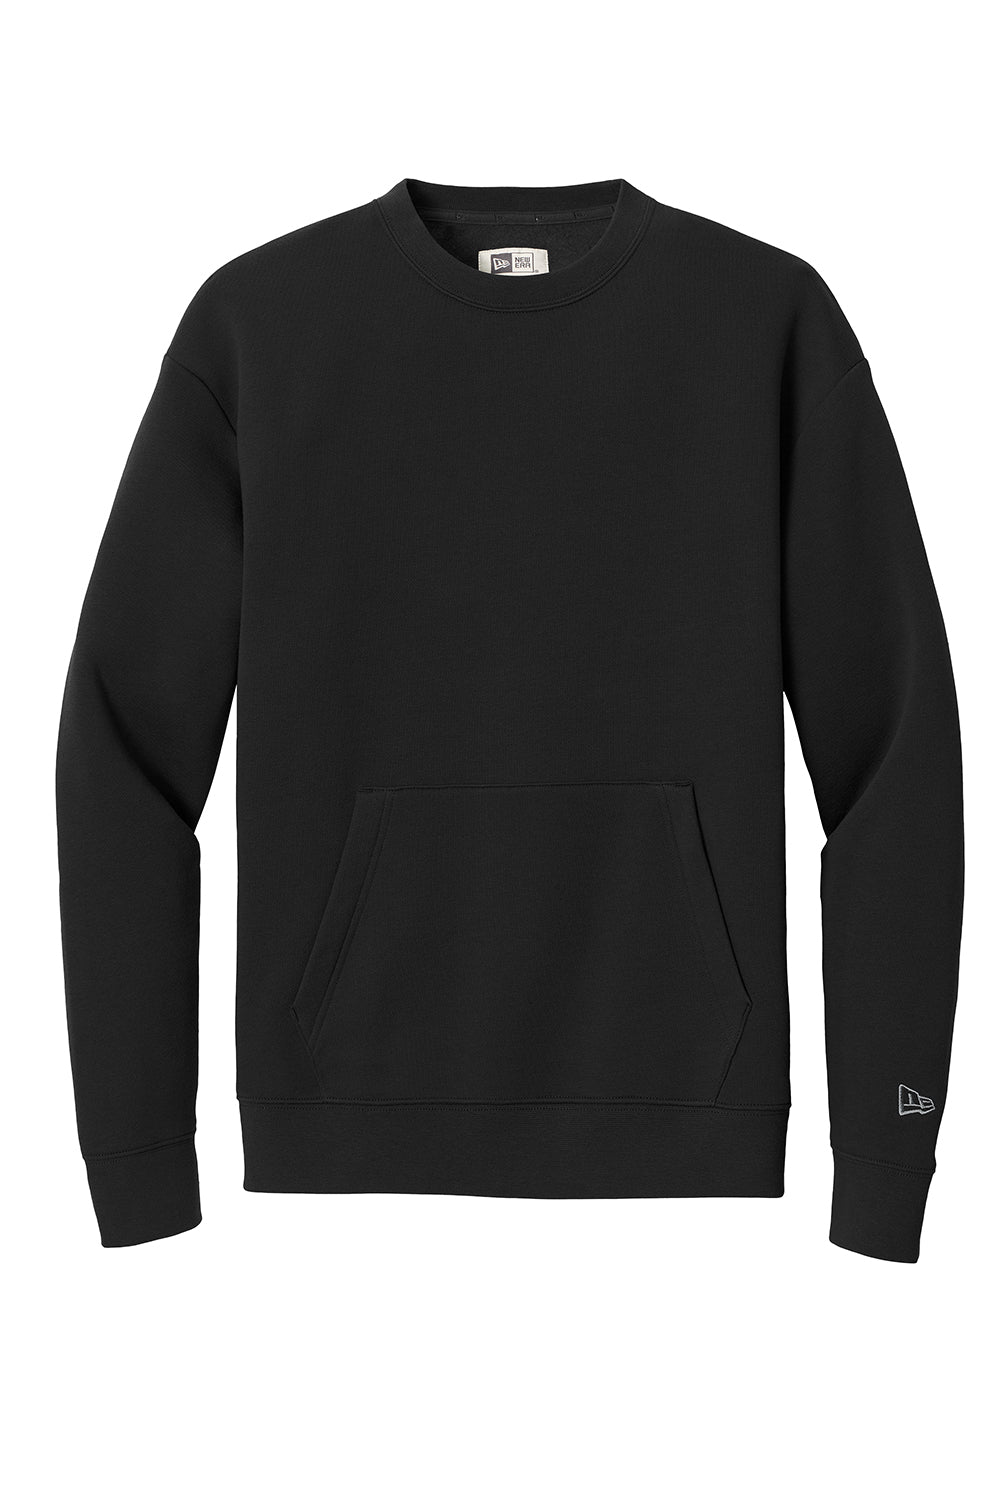 New Era NEA527 Mens Heritage Fleece Crewneck Sweatshirt w/ Pocket Black Flat Front